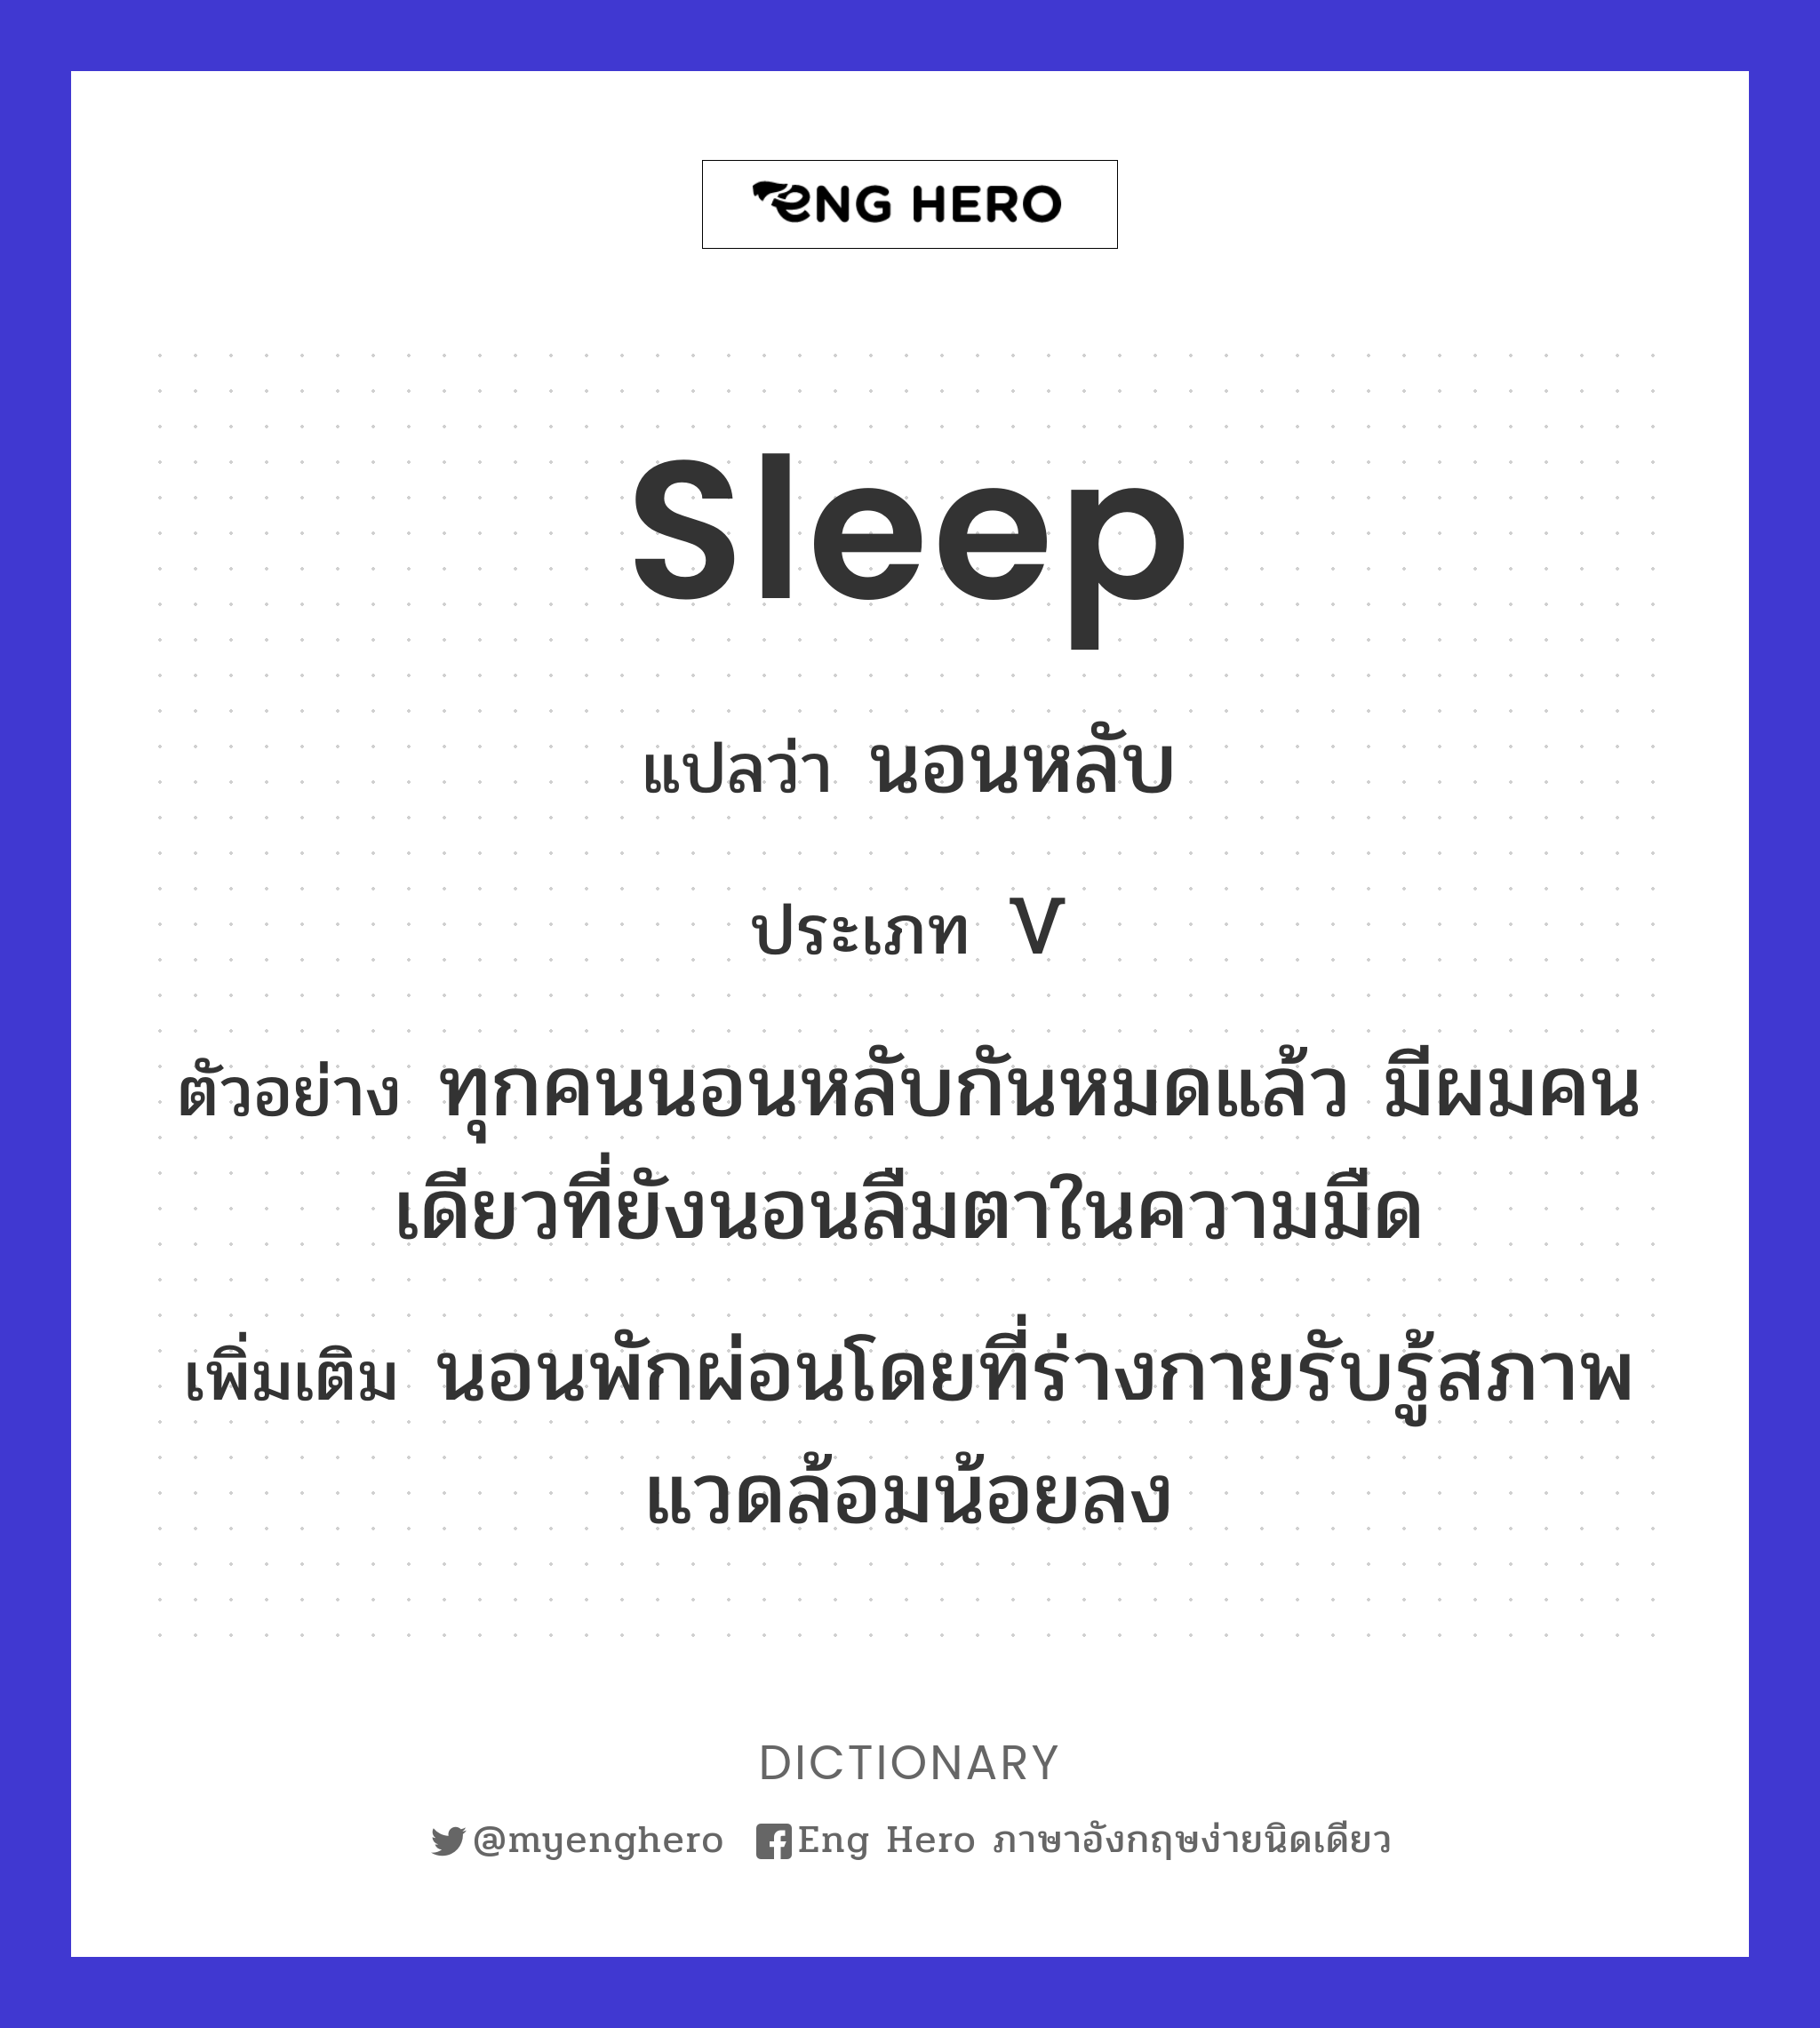 sleep